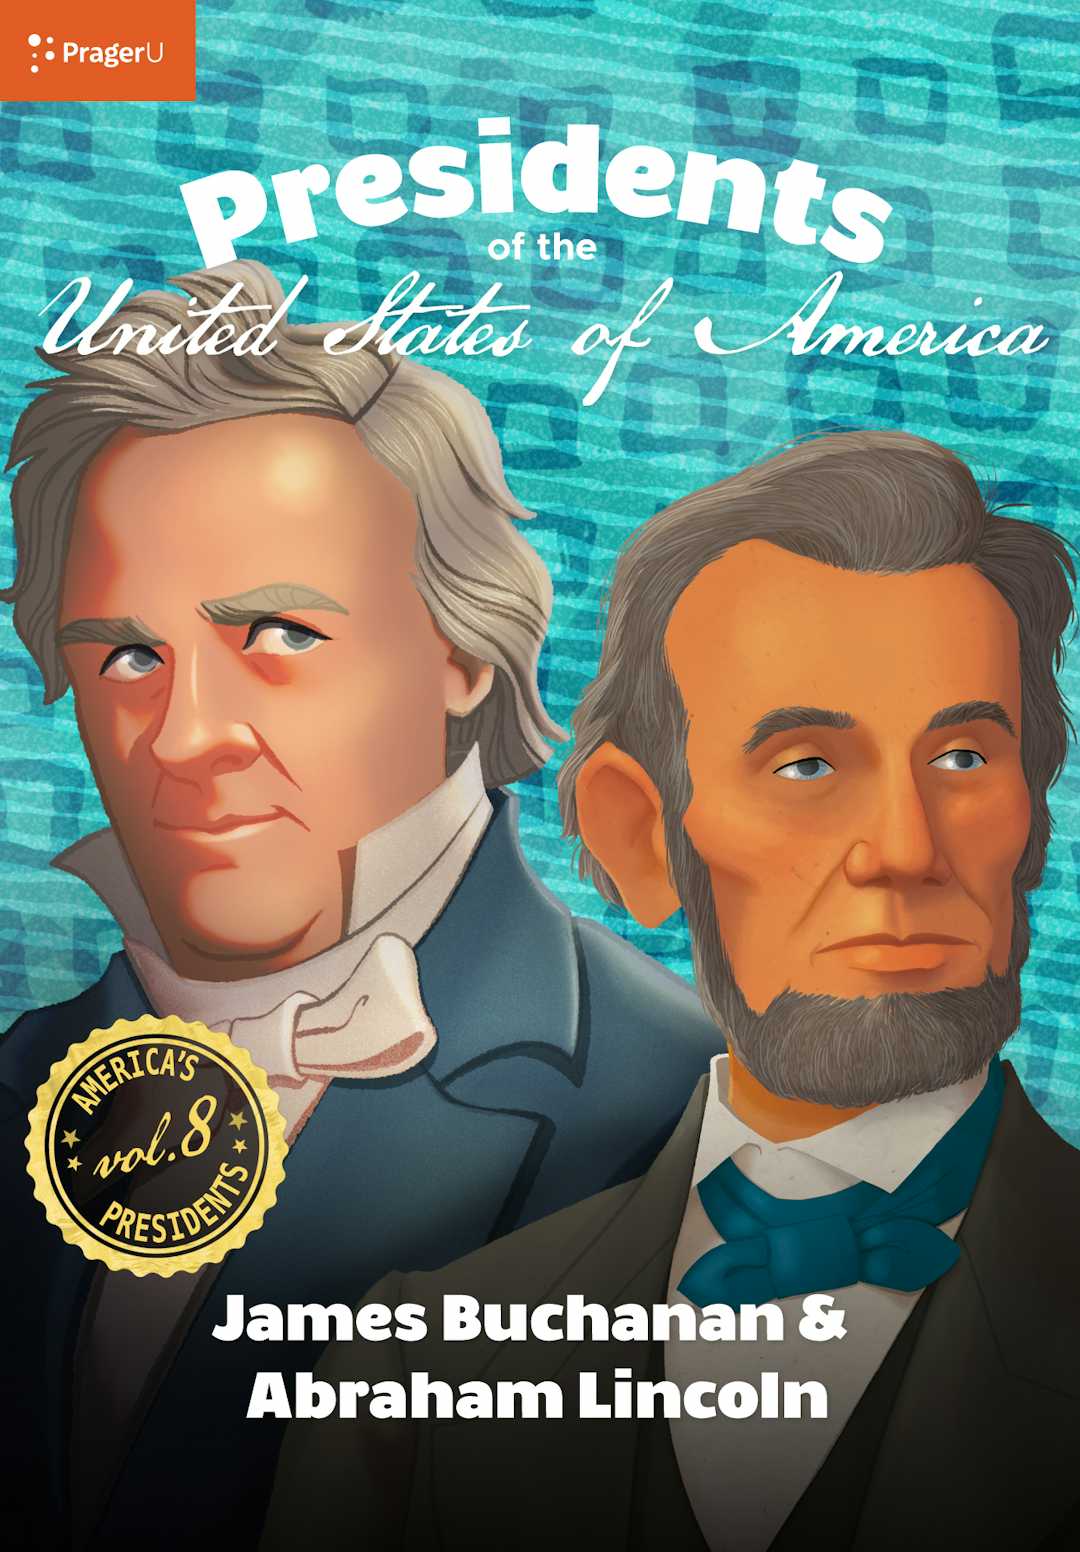 U.S. Presidents Volume 8: James Buchanan & Abraham Lincoln